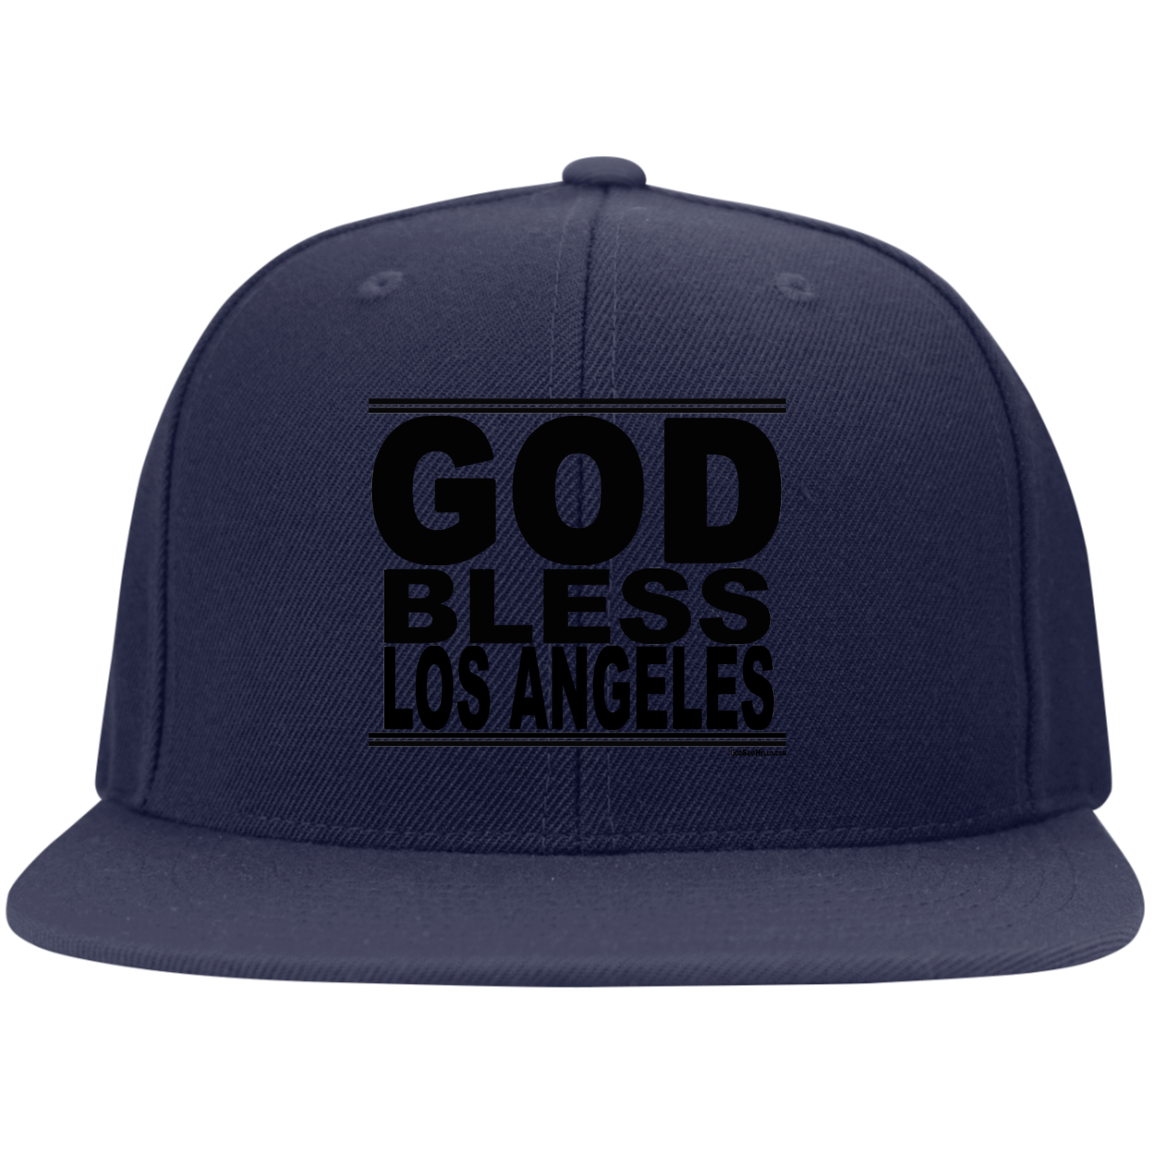 #GodBlessLosAngeles - Snapback Hat